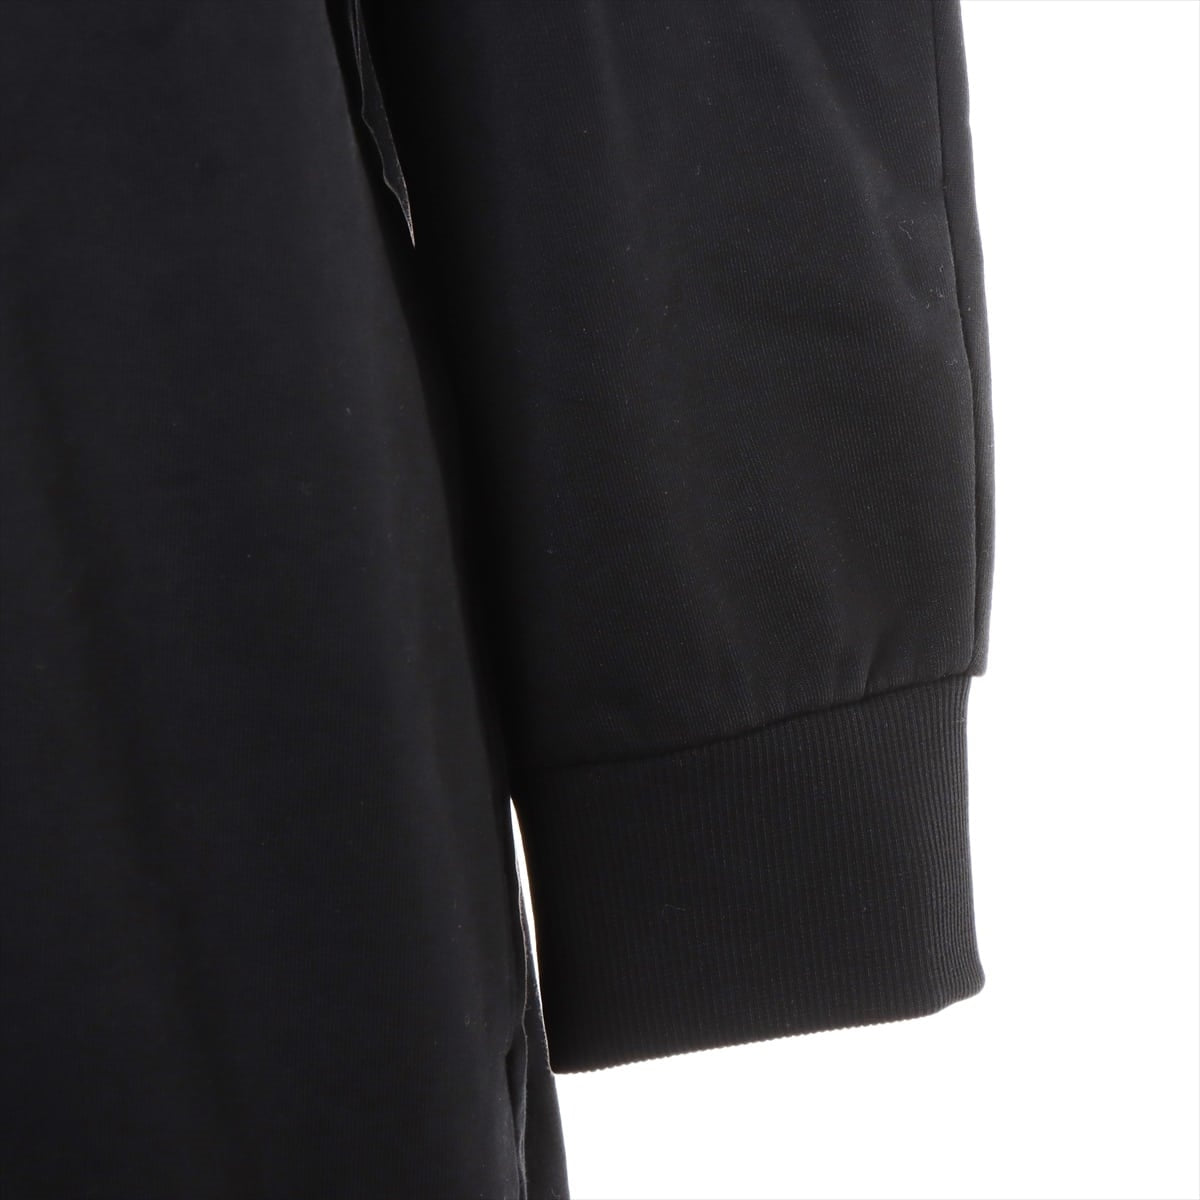 Stella McCartney Cotton Dress 38 Ladies' Black  sweatshirt dress